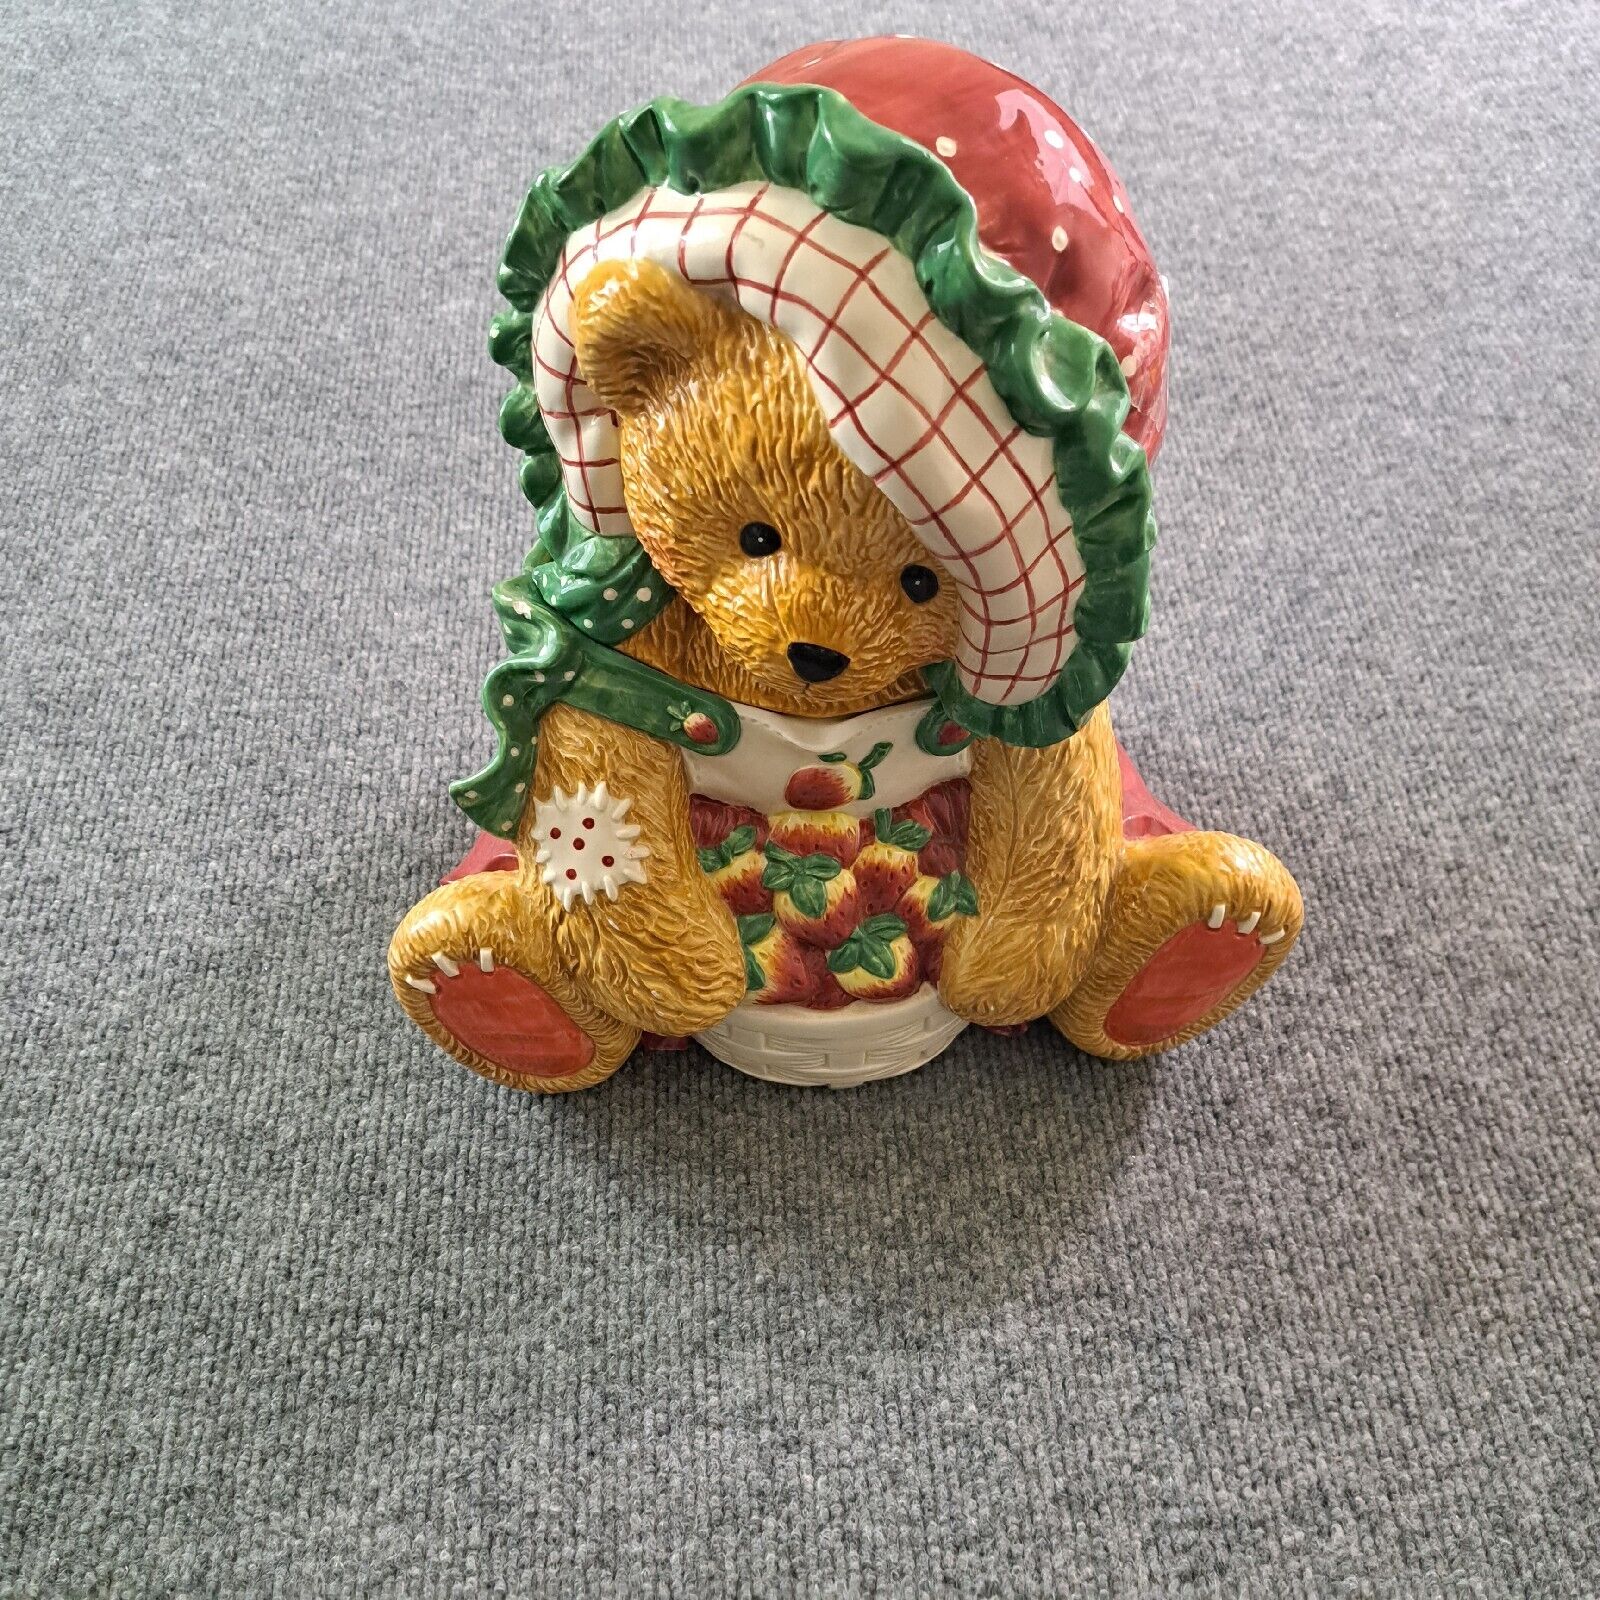 Cherished Teddies Bear Strawberry Lane Cookie Jar Ceramic #161306 Vintage 1995